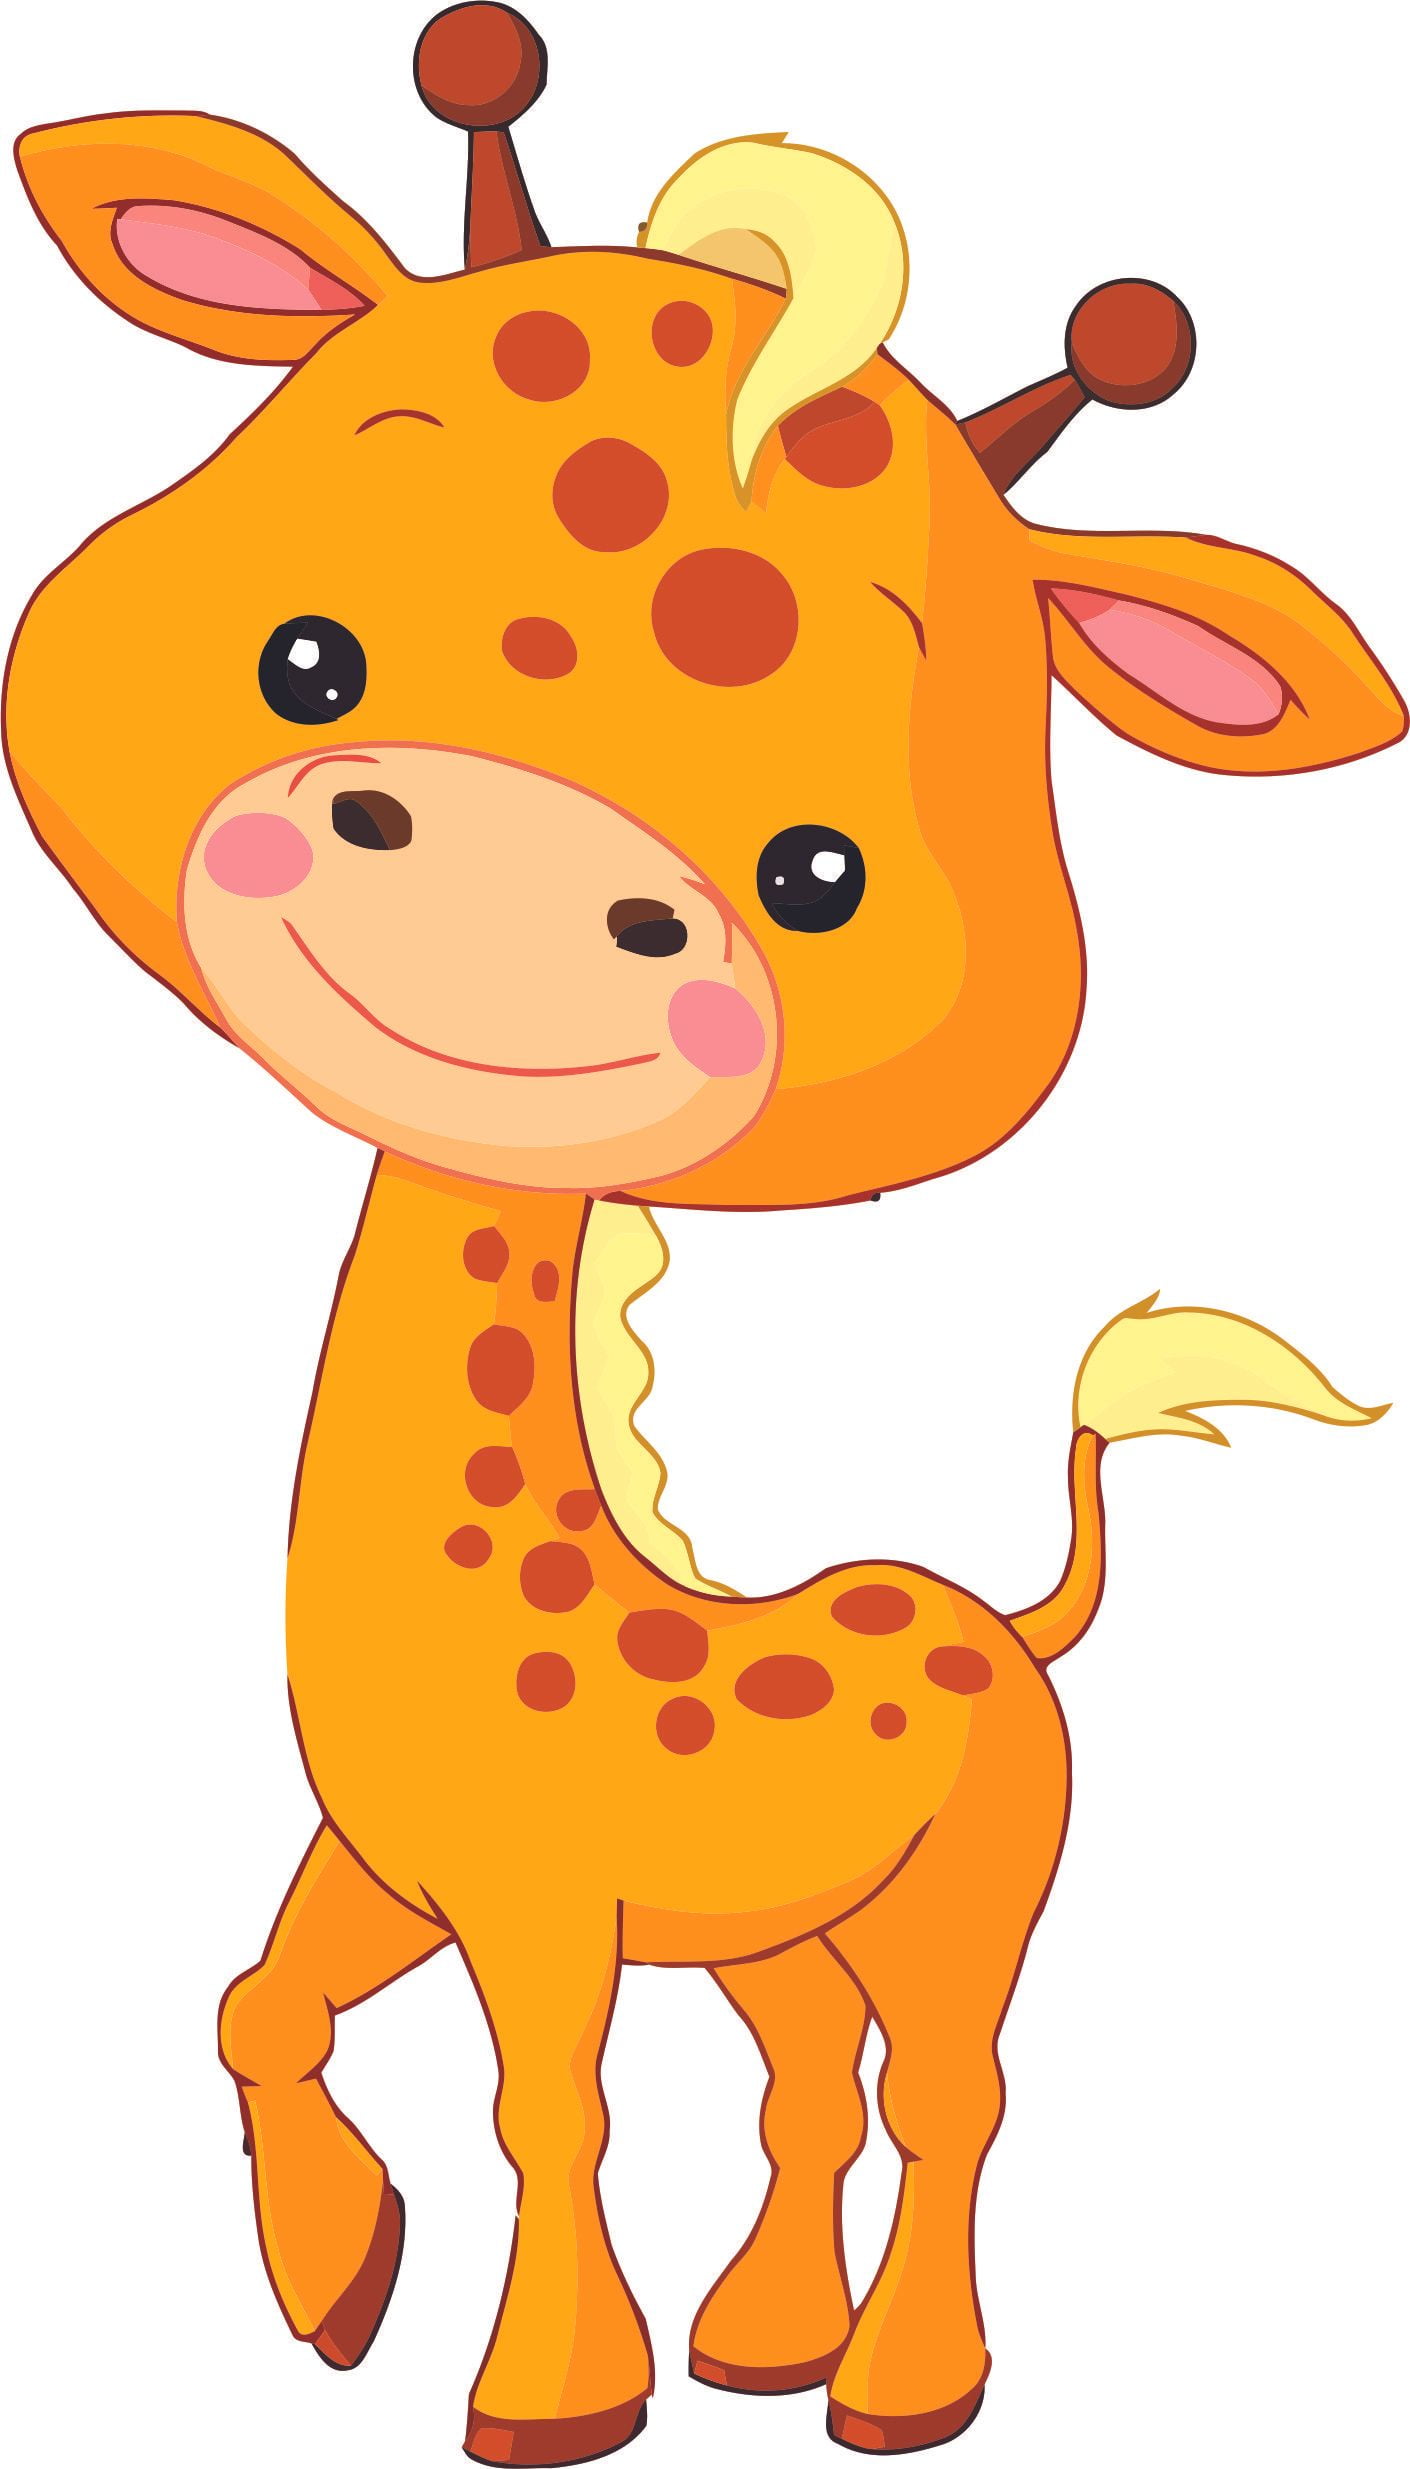 Baby Giraffe Giraffes Animal for Kids Rooms Zoo Safari Animals Cartoon  Design Wall Decals for Bedroom Bathroom Animal Animals Children's  Decorations Kids Vinyl Art Decal Walls Rooms Size (30x15 inch) 